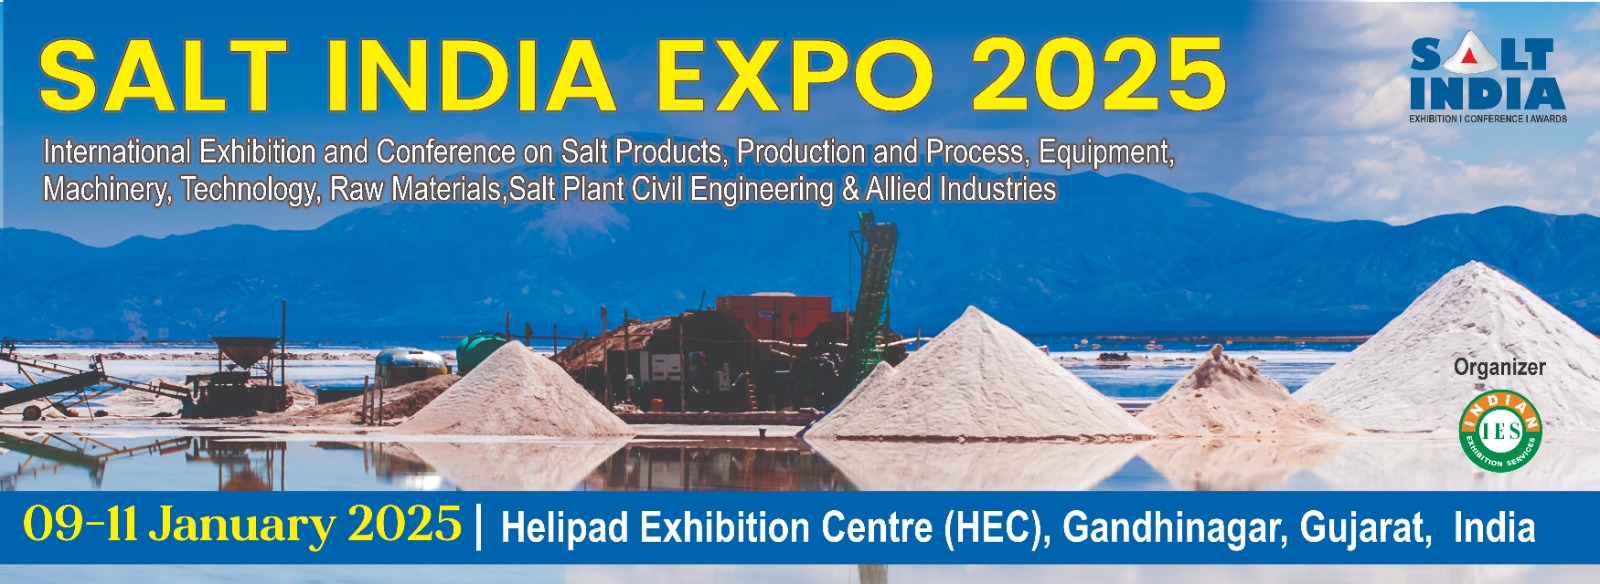 salt-india-expo